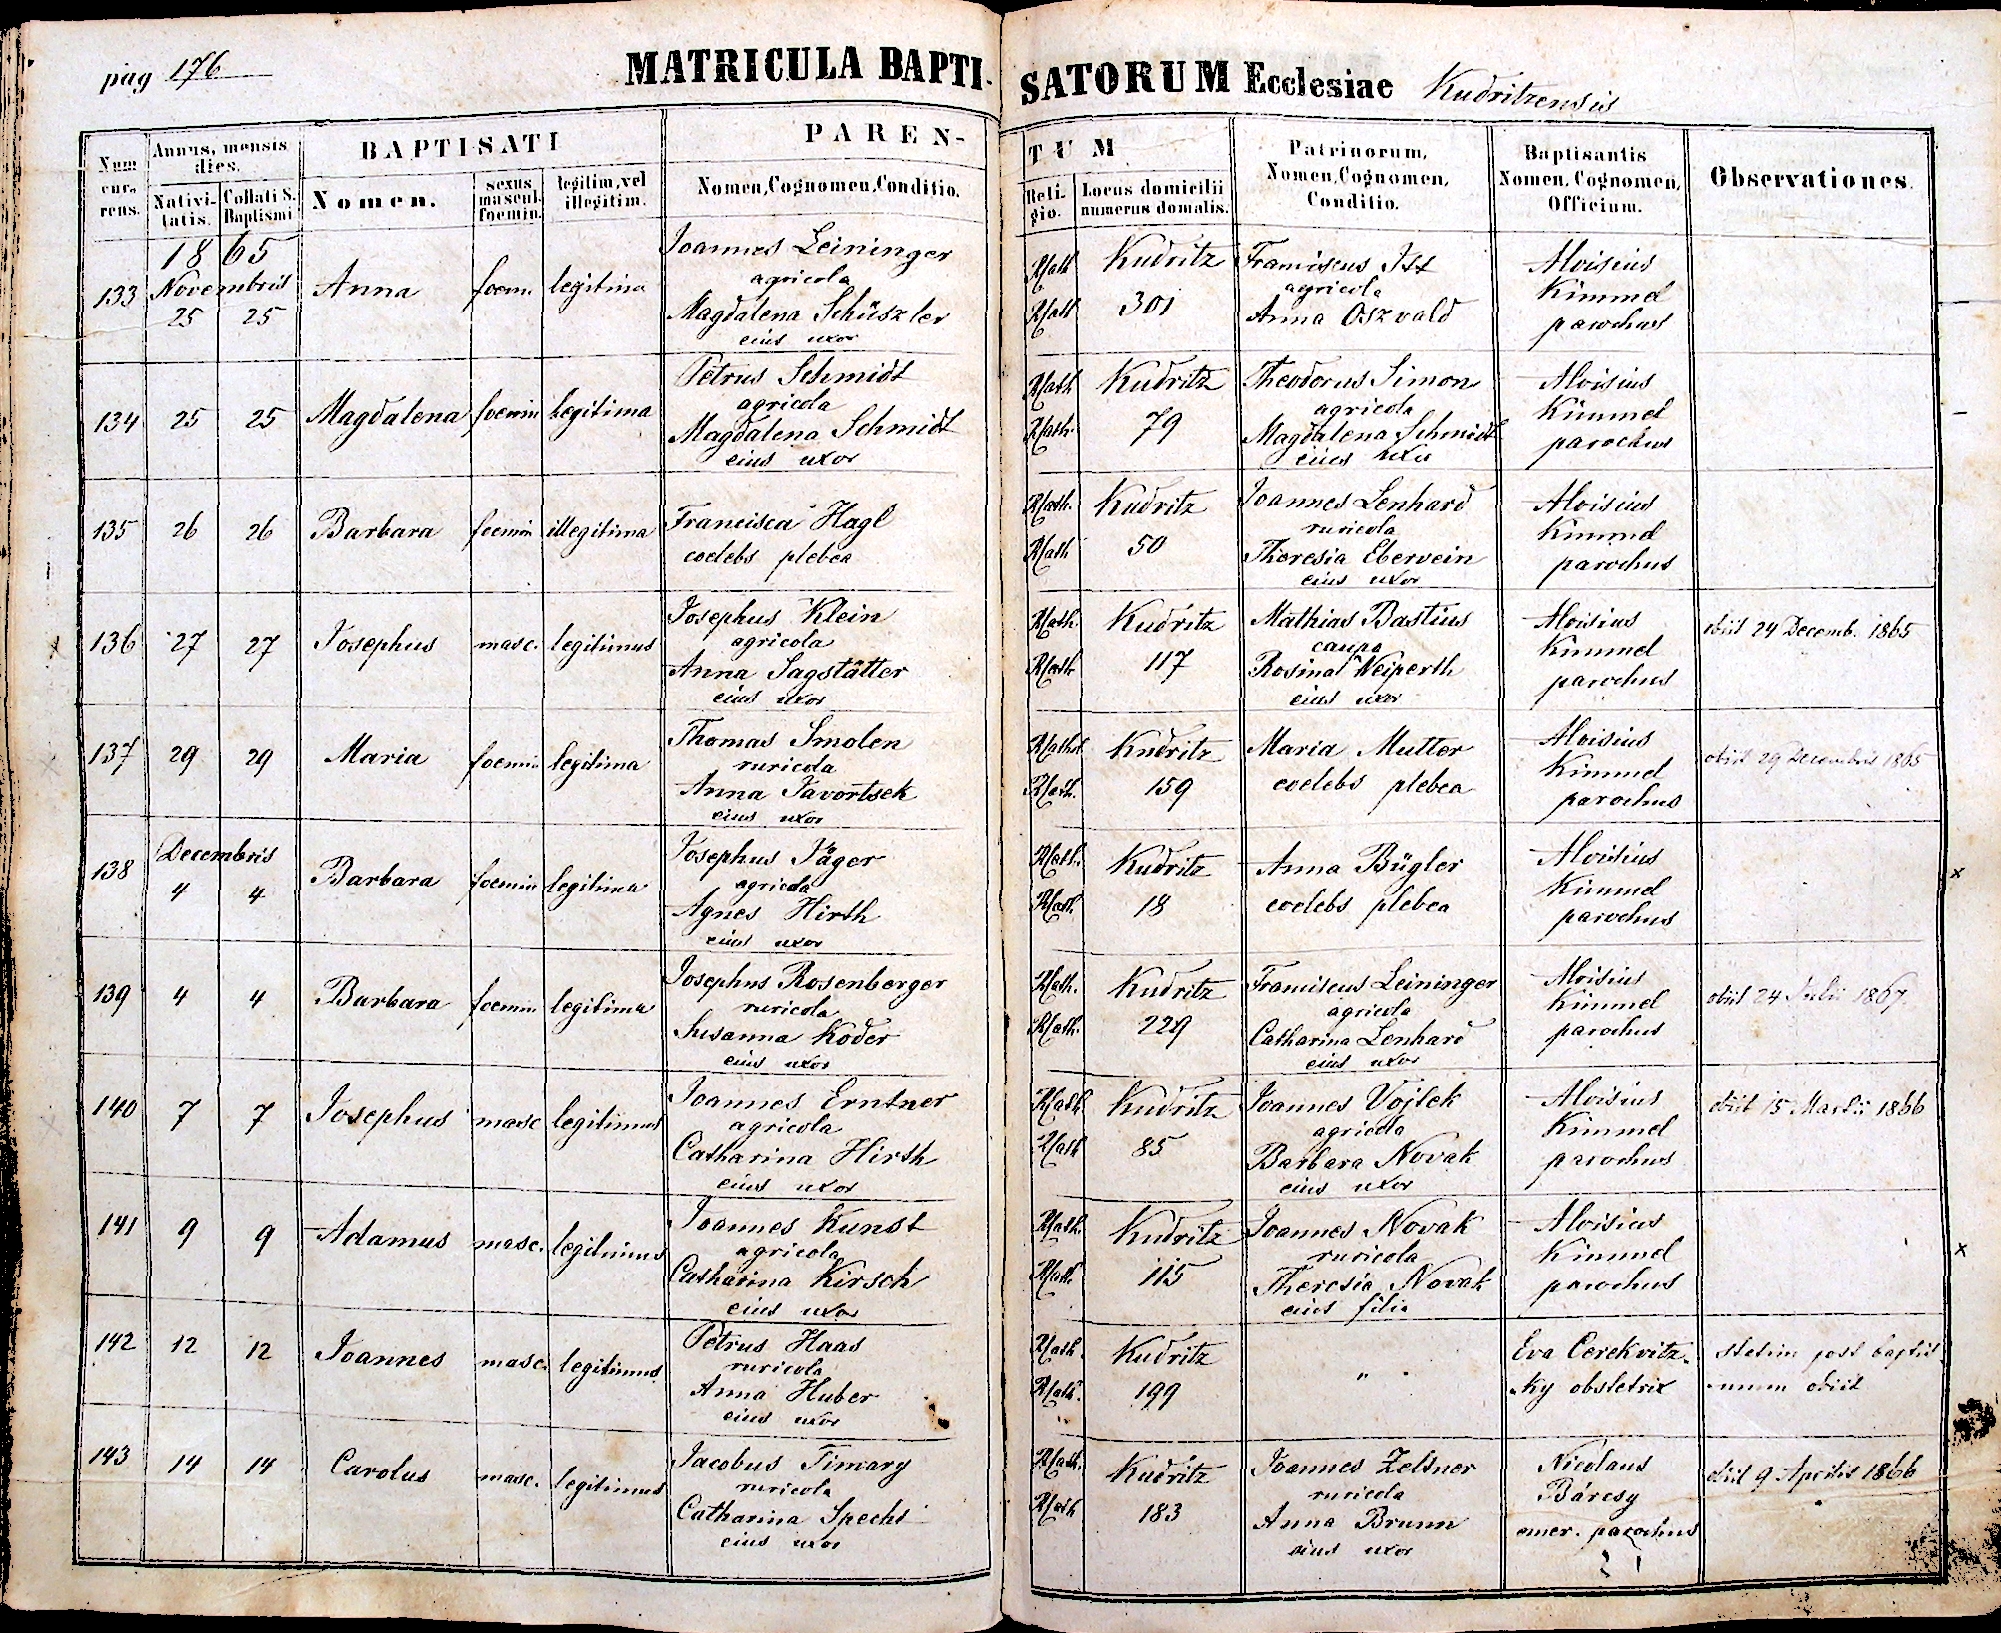 images/church_records/BIRTHS/1852-1870B/176